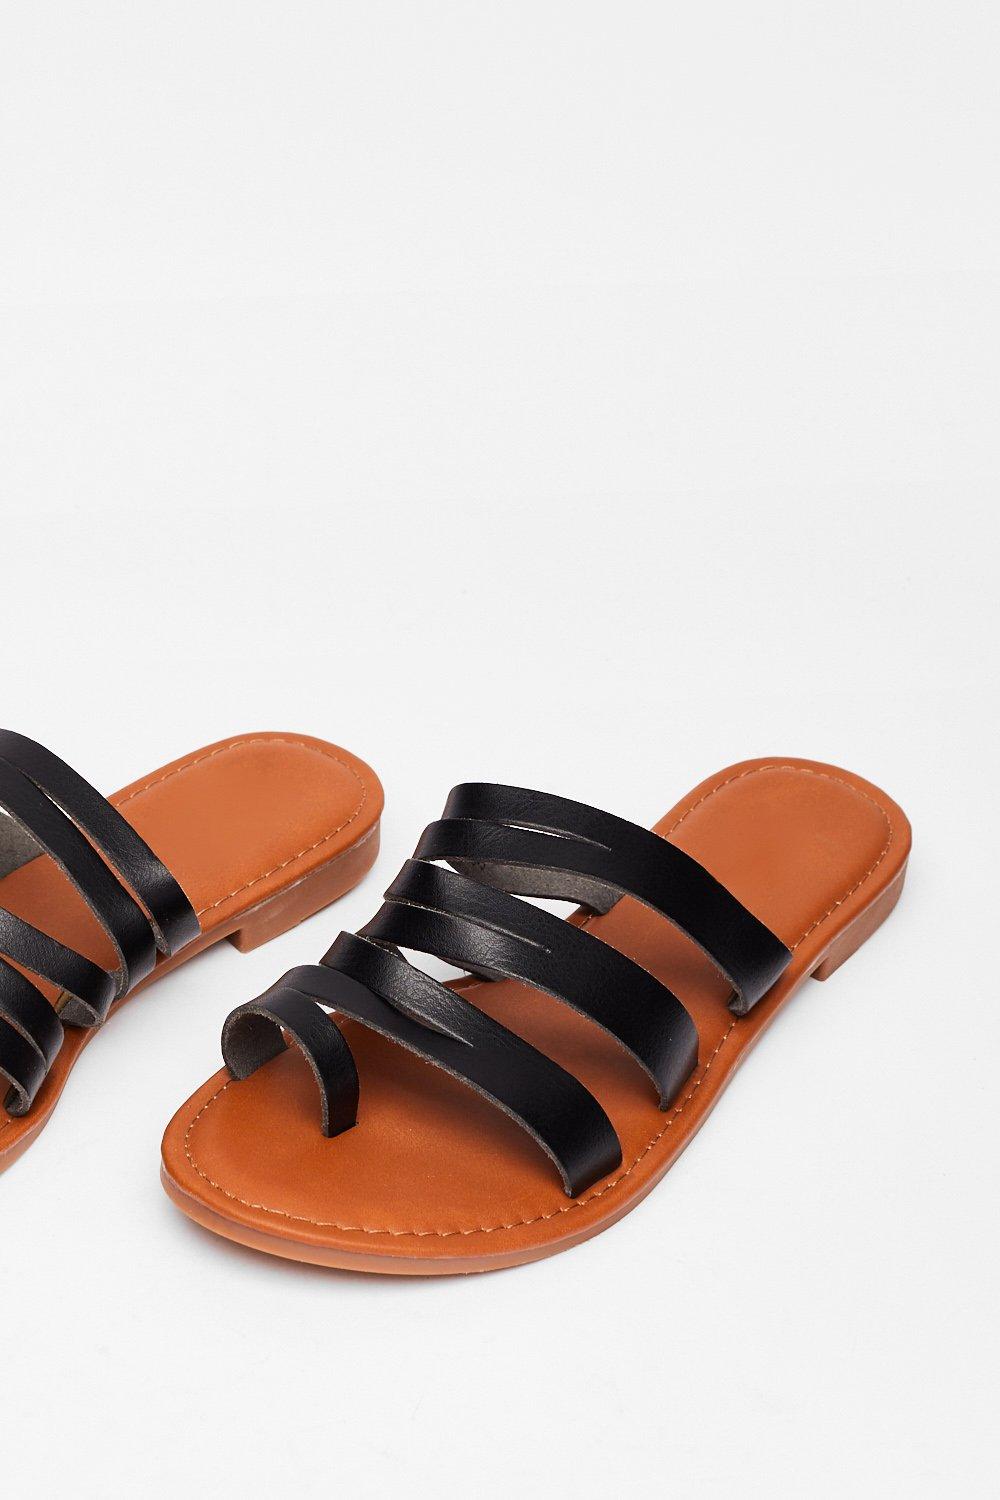 flat black strappy sandals